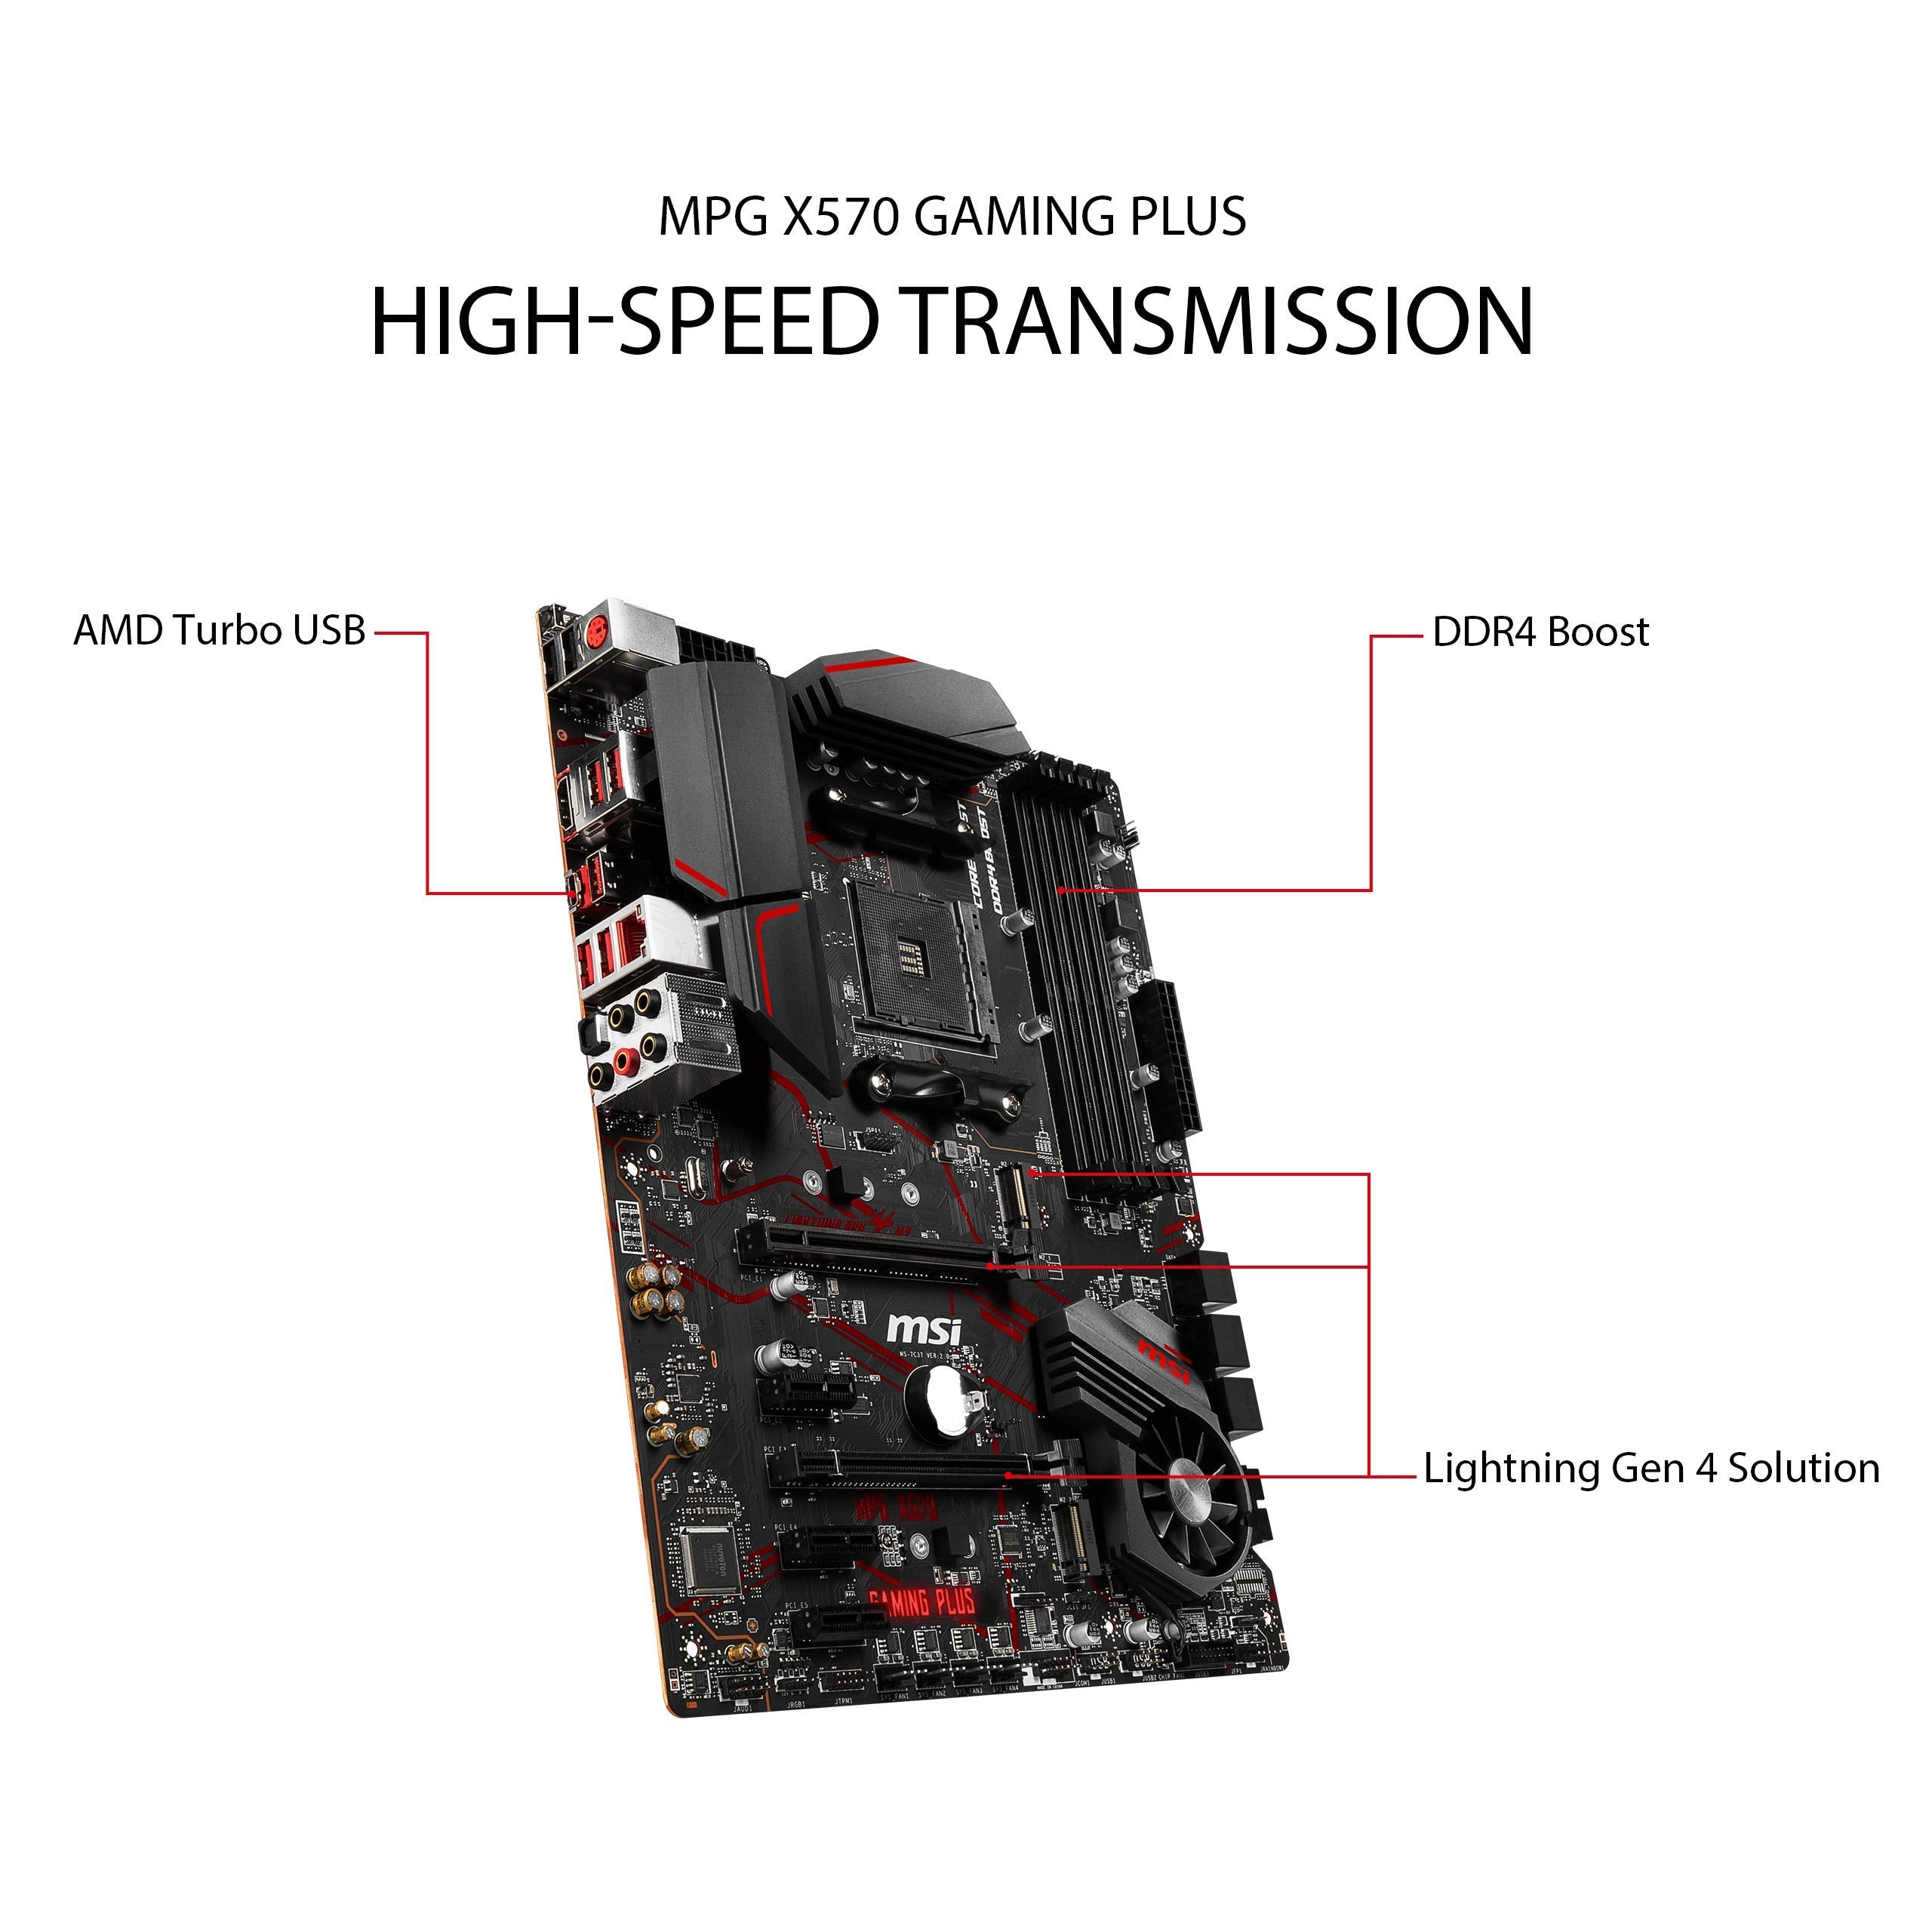 MSI MPG X570 GAMING PLUS Motherboard ATX - Supports AMD Ryzen 2nd and 3rd Gen Processors, AM4, Dual Channel DDR4, 2 x PCIe 4.0 x16, 1 x M.2 Gen4 x4, Gigabit LAN